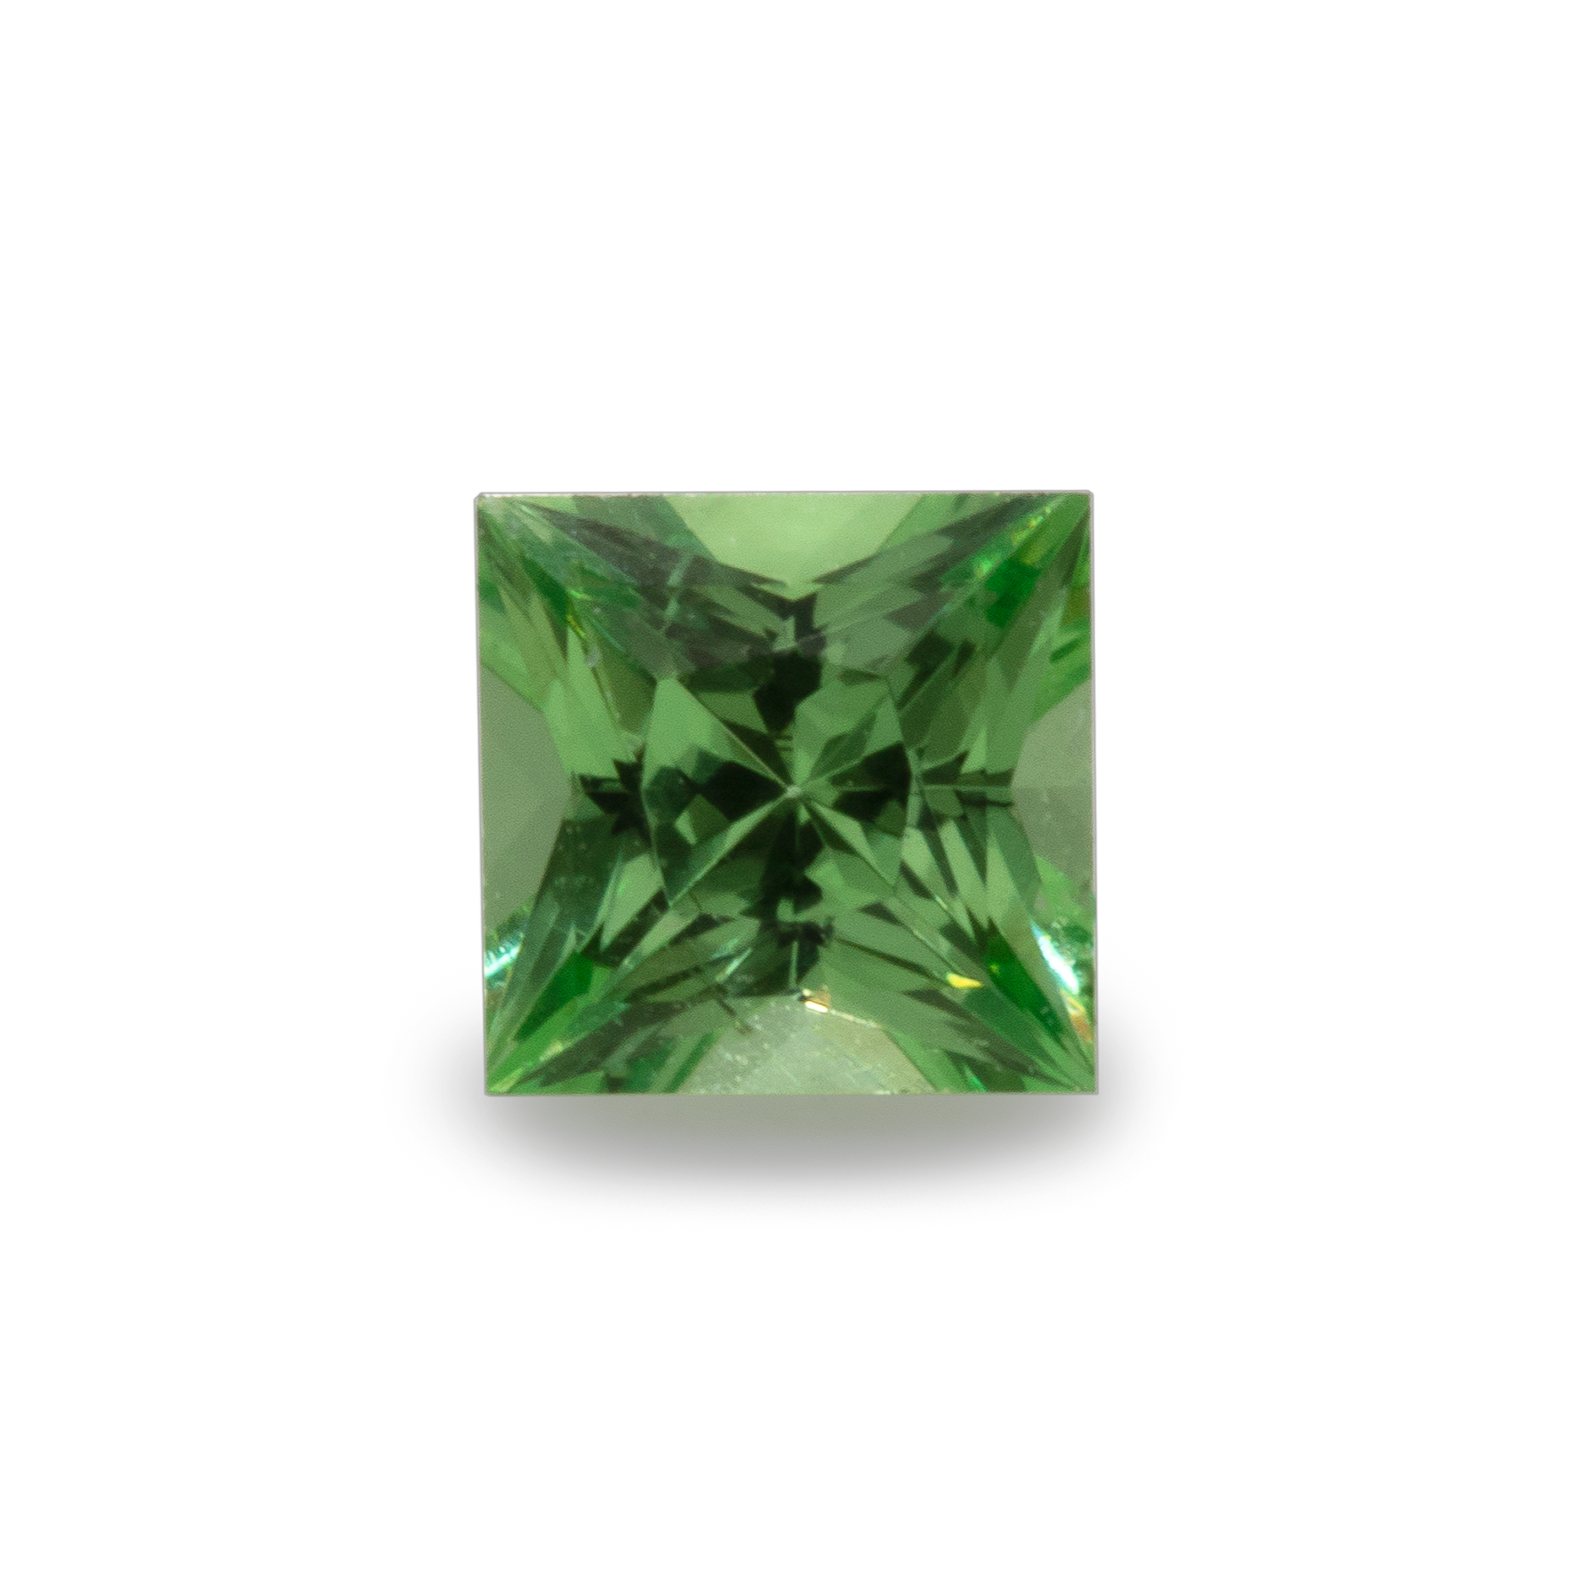 Tsavorite - green, square, 2.5x2.5 mm, 0.080-0.095 cts, No. TS60001